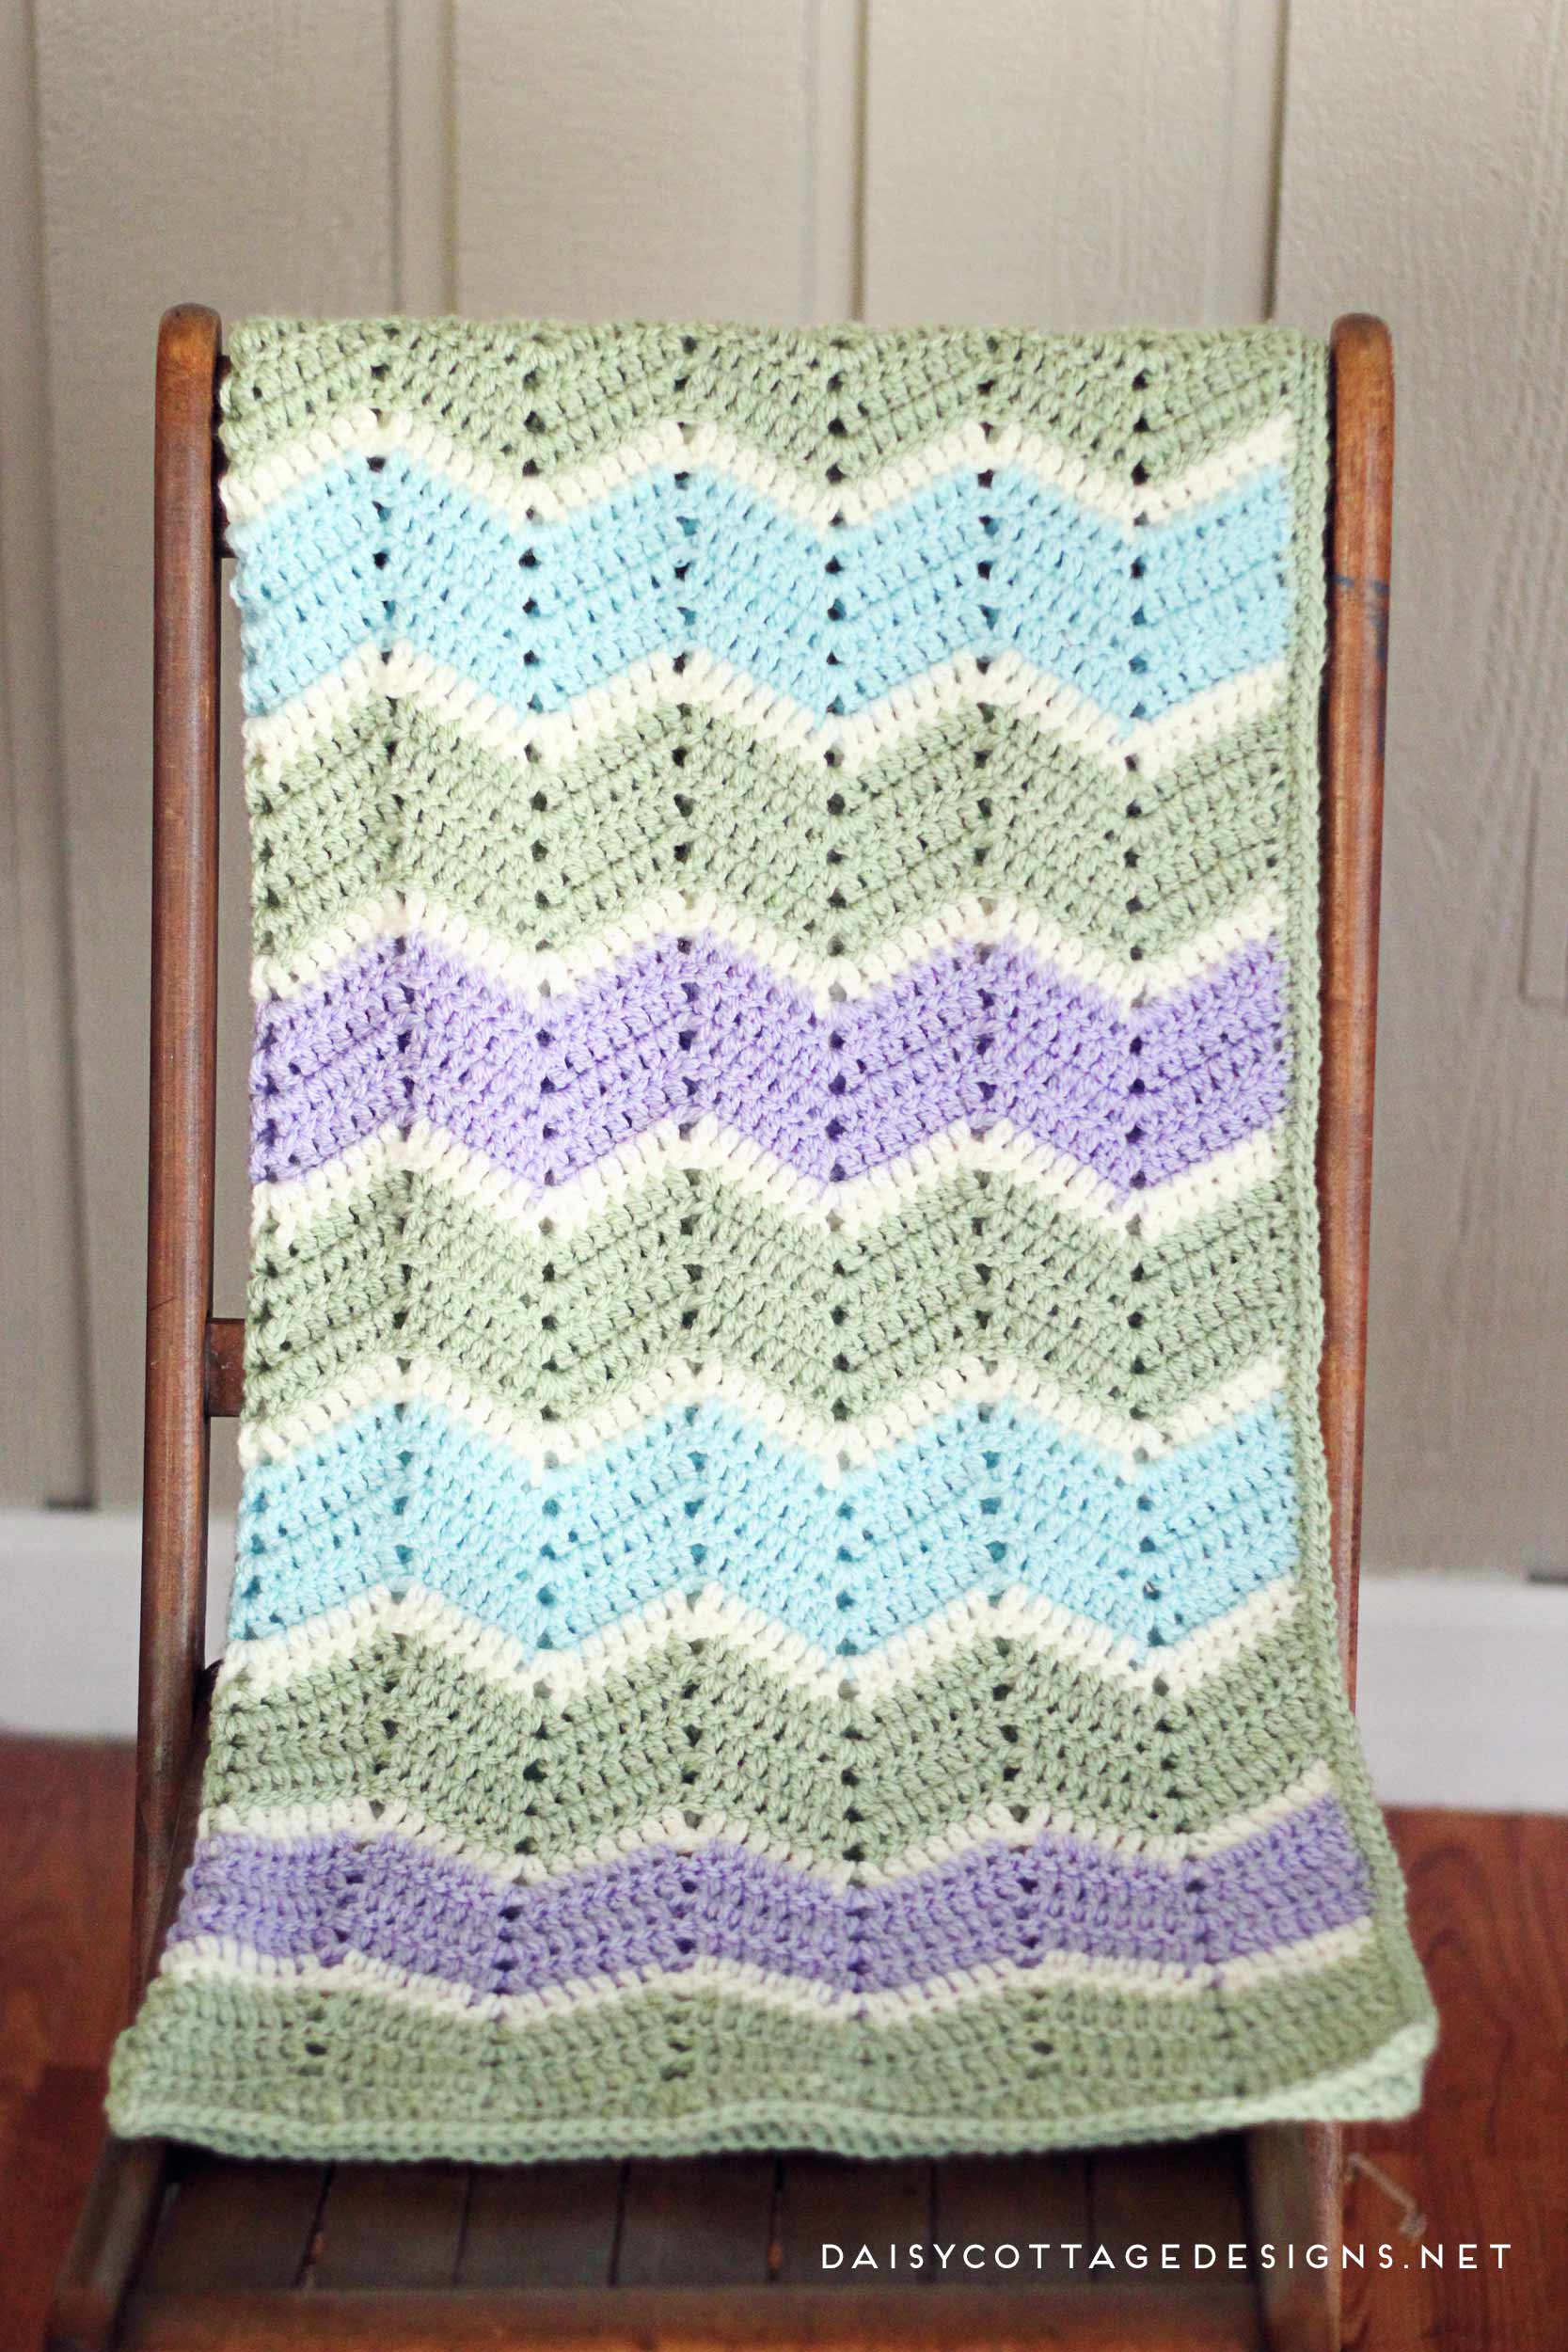 Crochet Baby Afghan Patterns Easy Chevron Blanket Crochet Pattern Daisy Cottage Designs